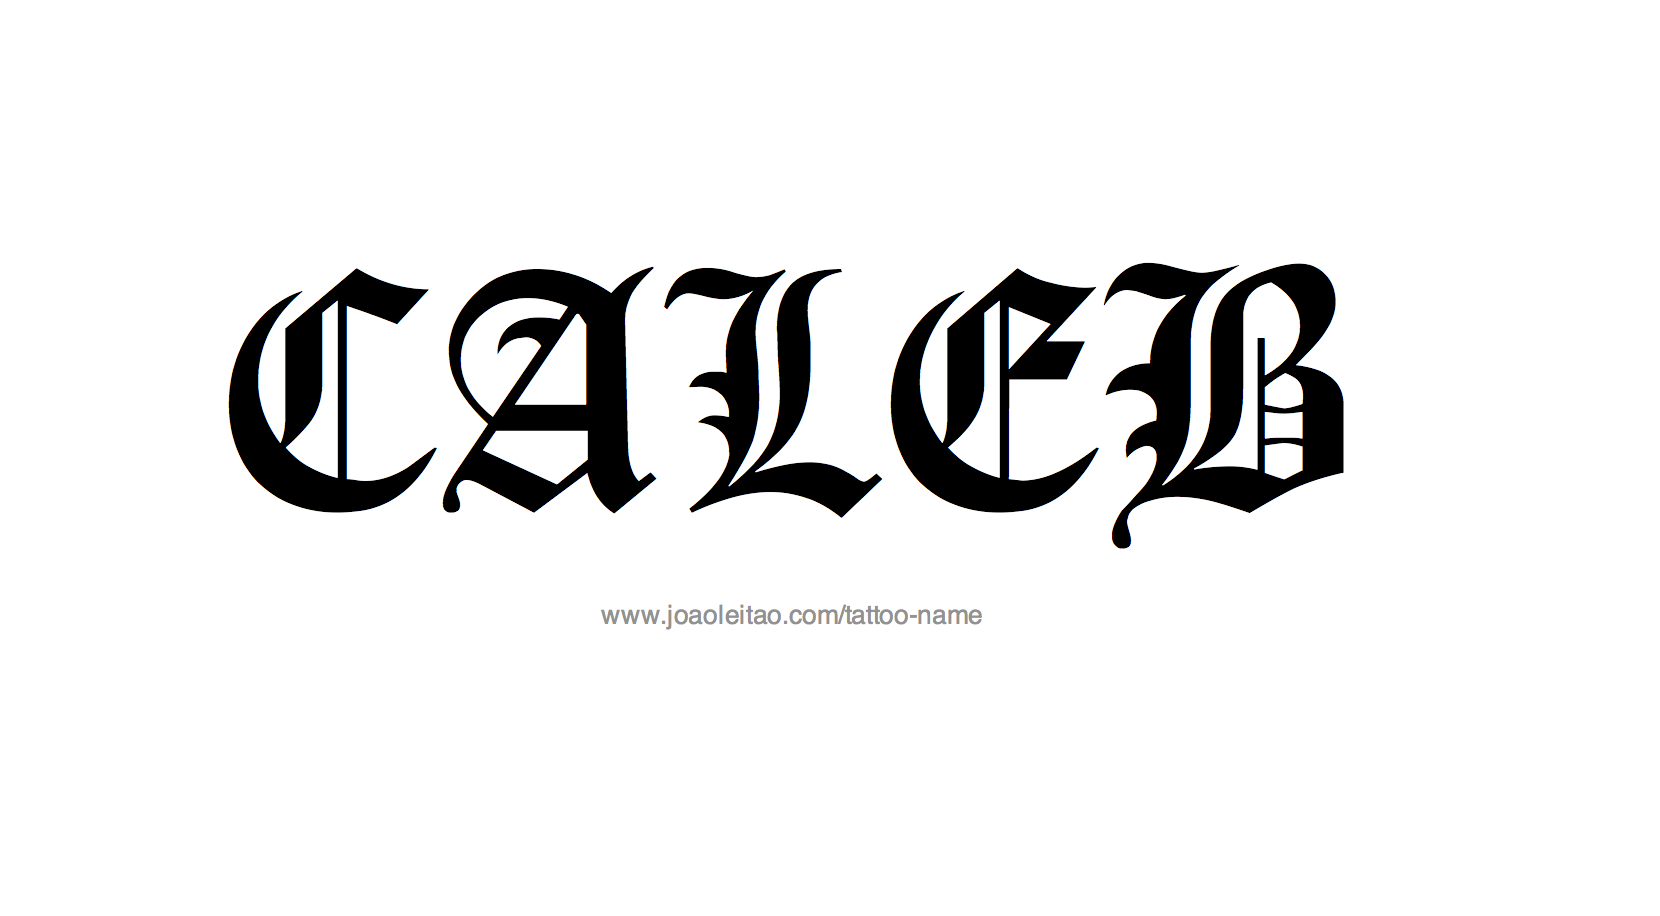 Tattoo Design Name Caleb